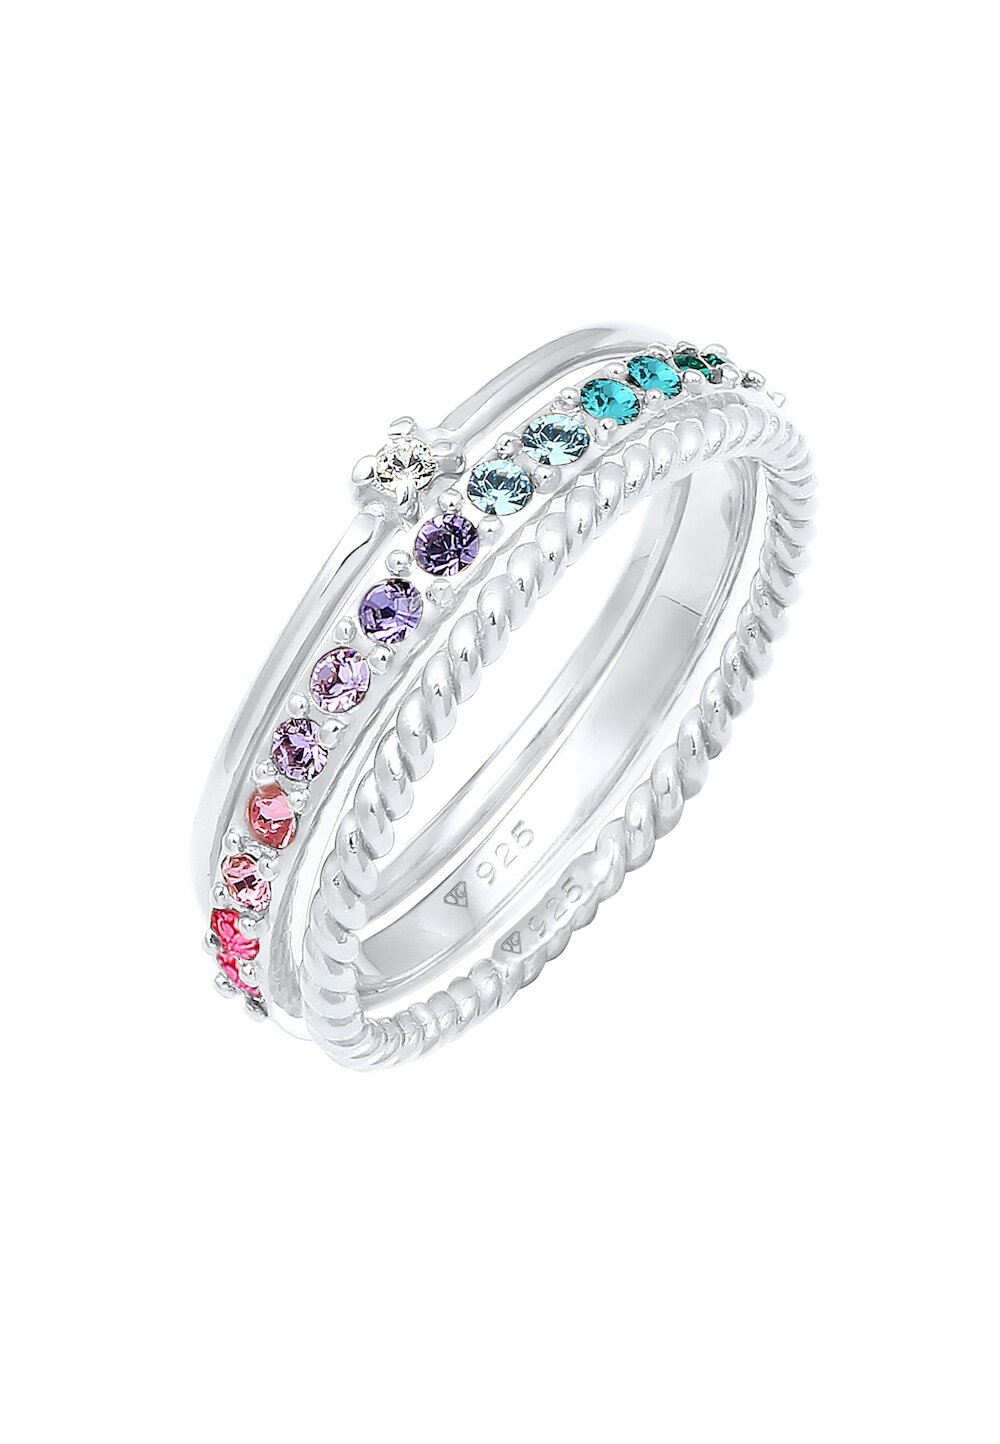 Elli Elli Elli Ring Dames Set Multi-Colour Fonkelend met kristallen Kleurrijk in 925 sterling zilver verguld Ringen